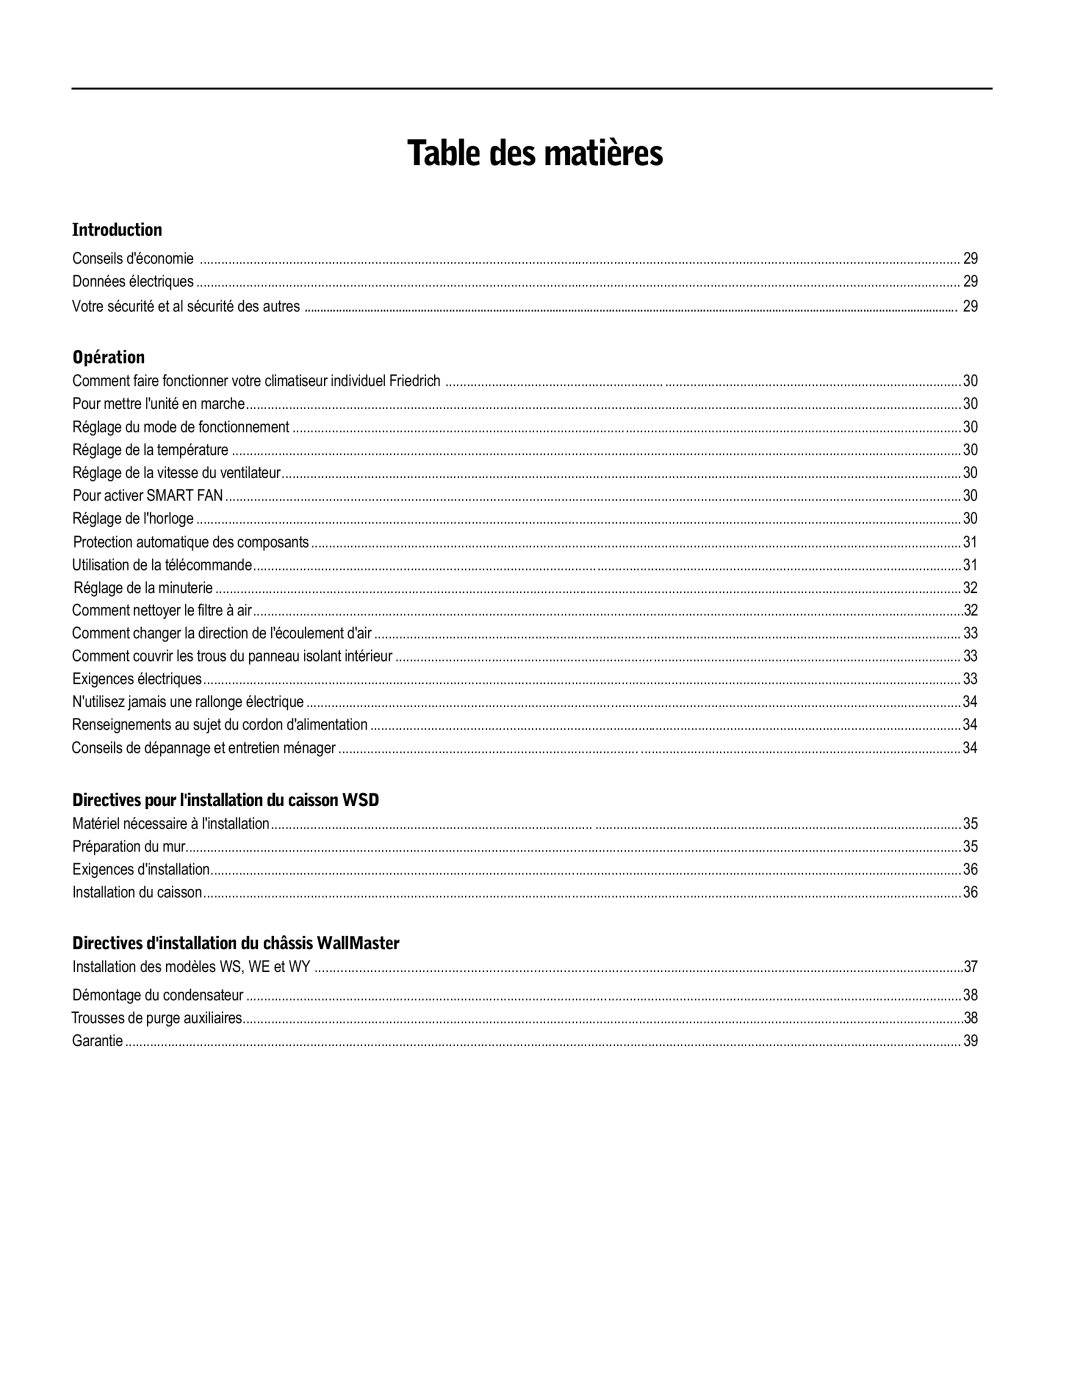 Friedrich WY09, WY12, WS12 Table des matières, Introduction, Opération, Directives pour linstallation du caisson WSD 